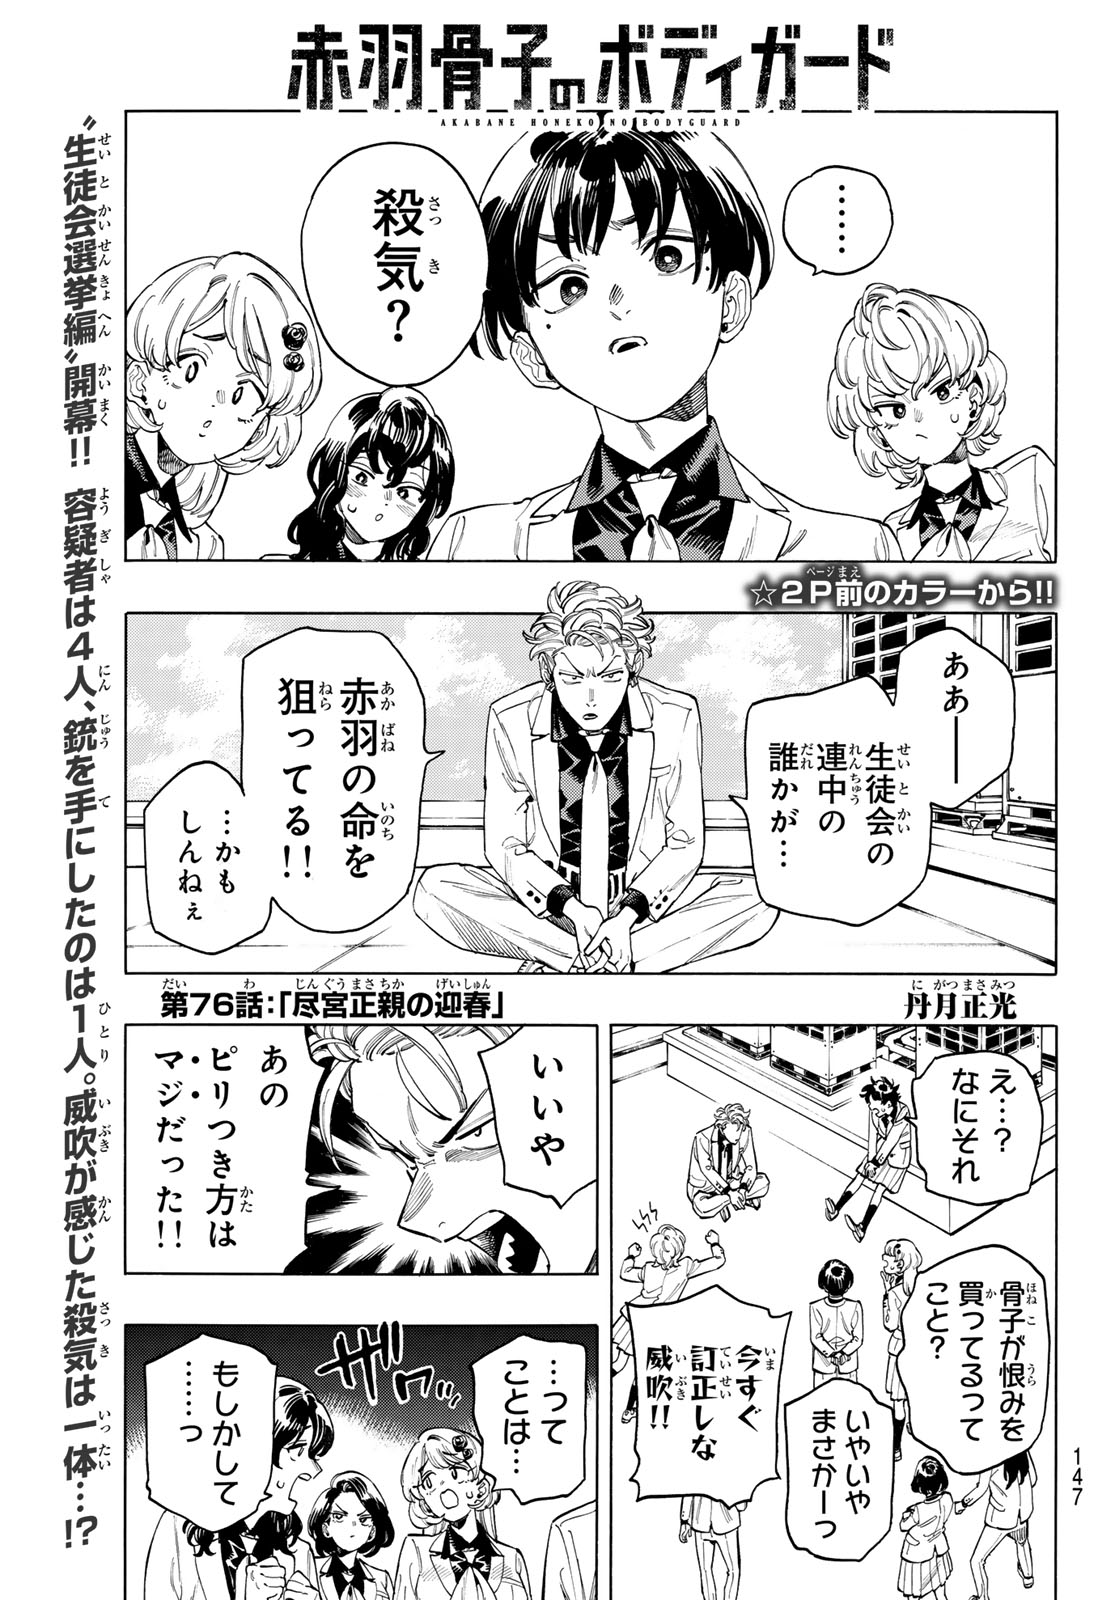 Akabane Honeko no Bodyguard - Chapter 76 - Page 2